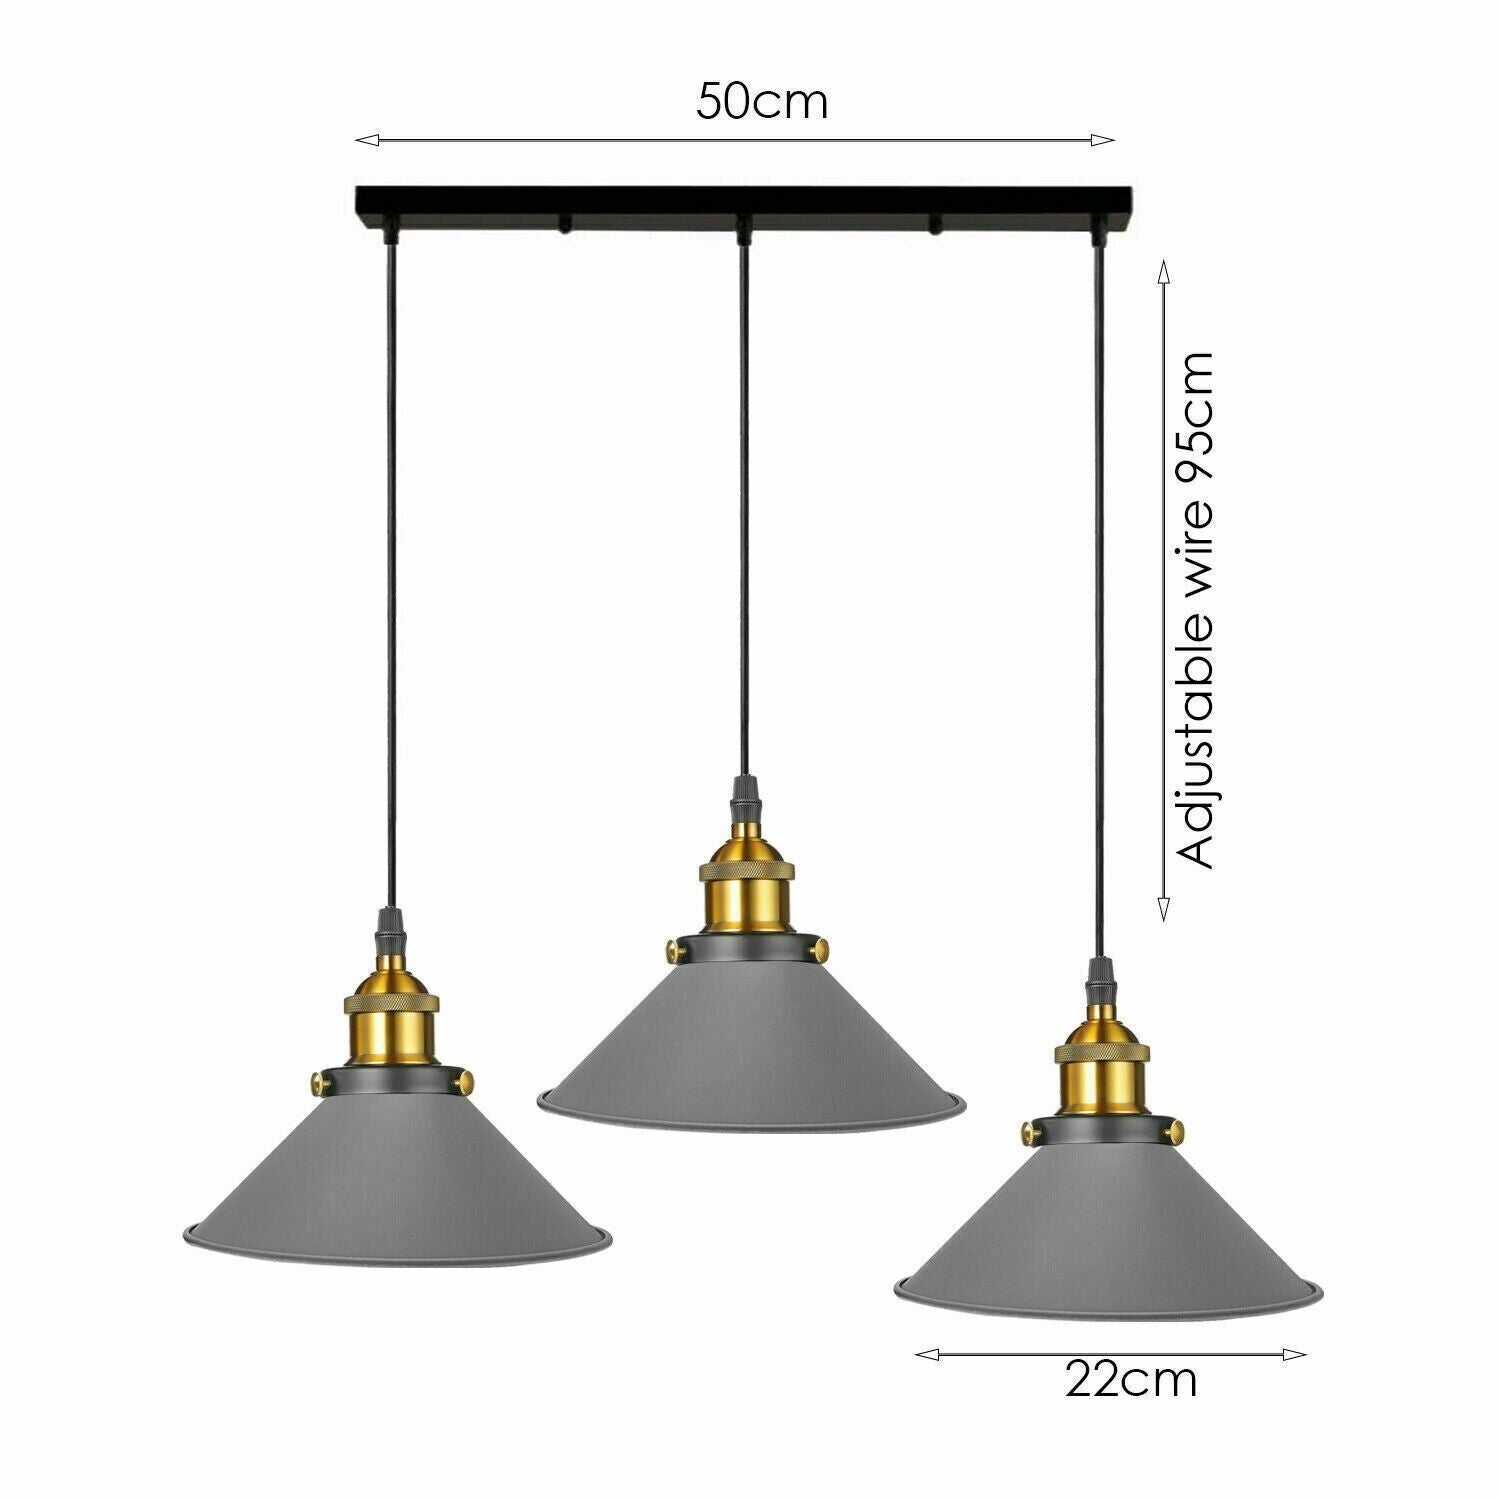 Metal Lampshade Ceiling Fixture Indoor Decor Light Cone image